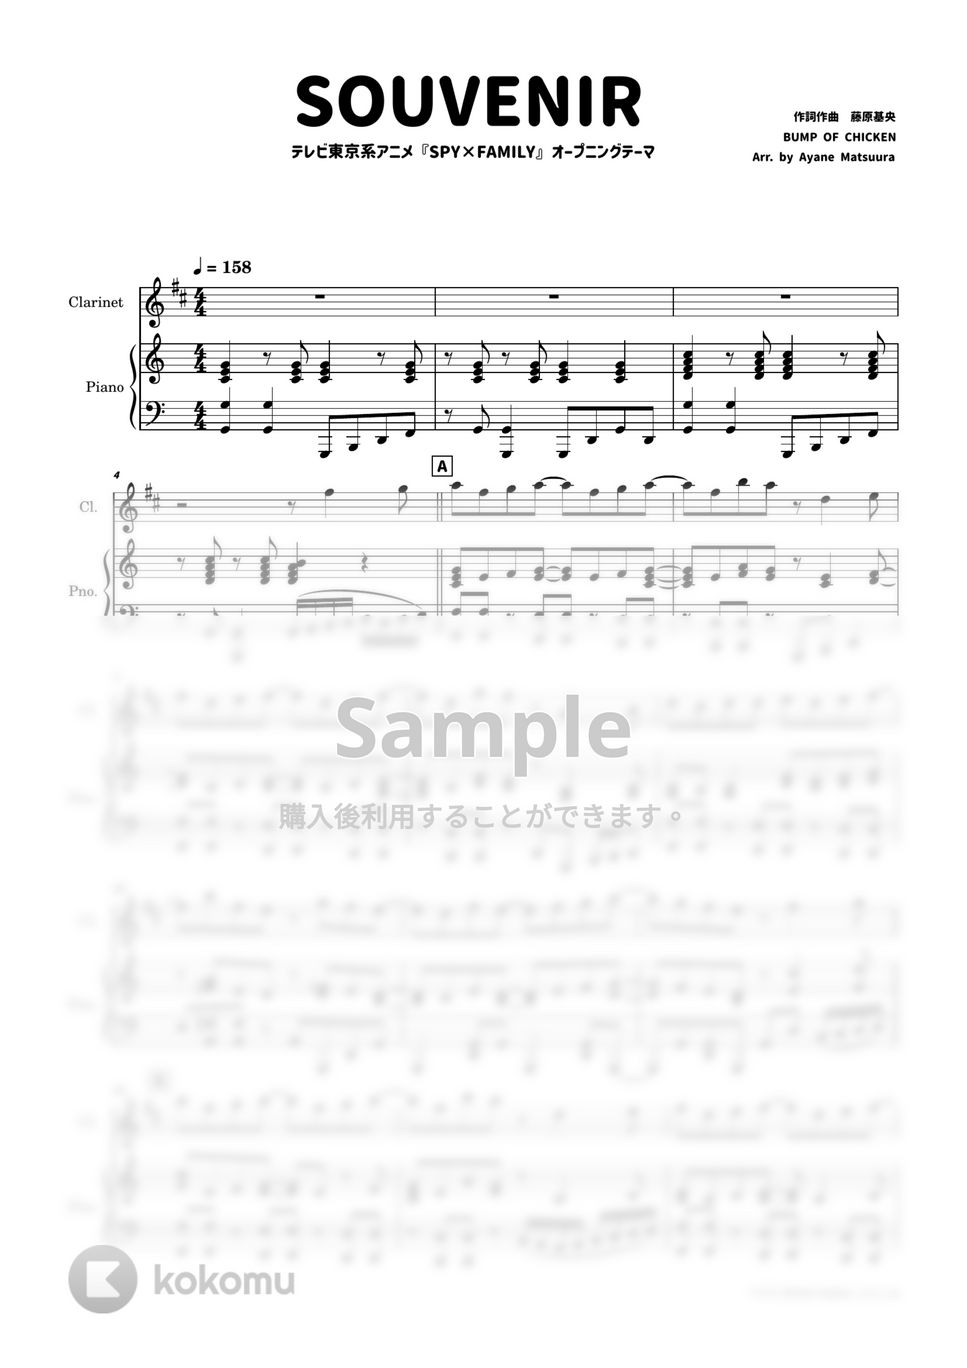 BUMP OF CHICKEN - inC SOUVENIR [クラリネット＆ピアノ]BUMP OF CHICKEN (TVアニメ『SPY×FAMILY』) by 管楽器の楽譜★ふるすこあ